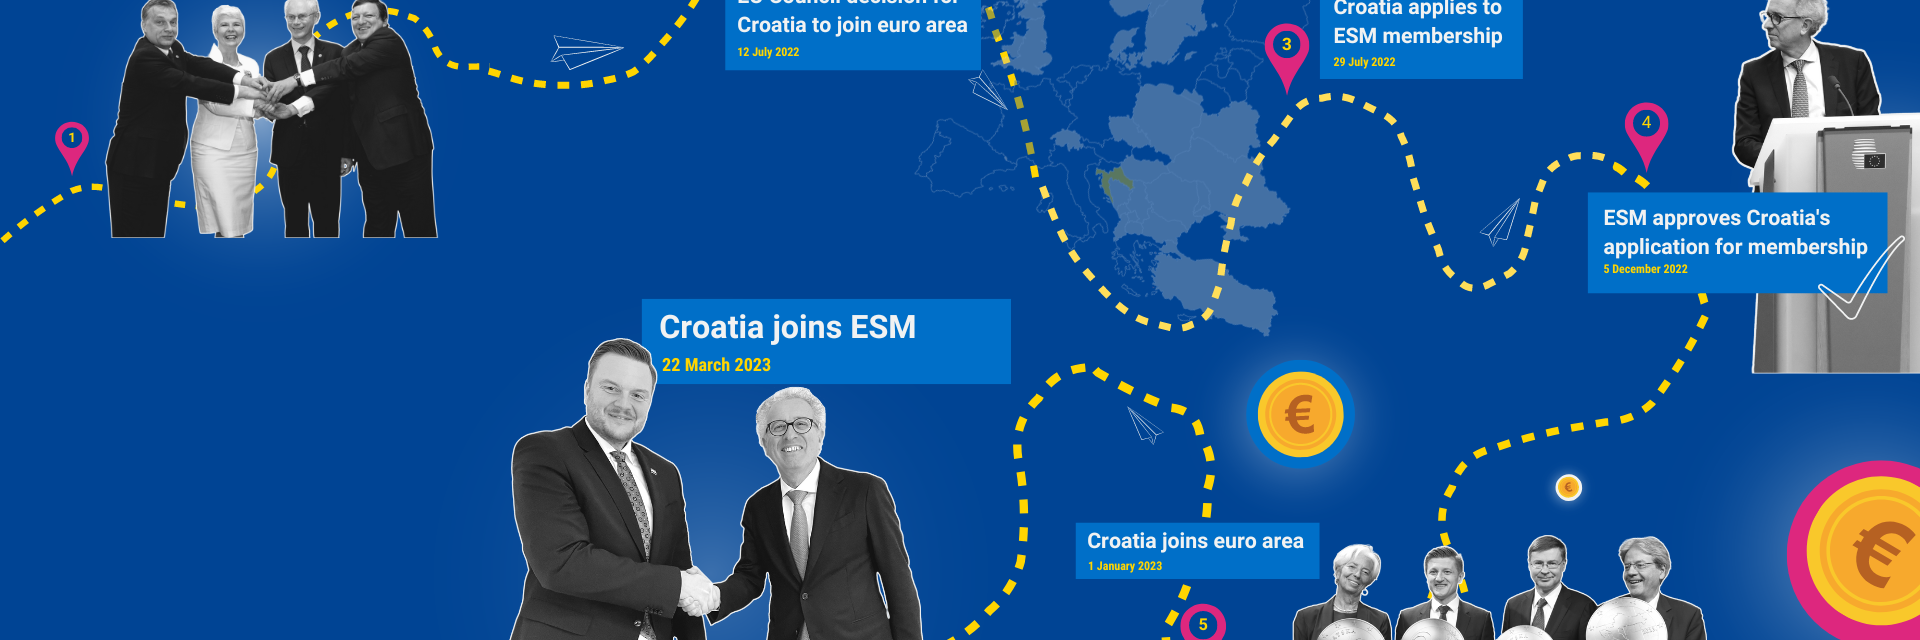 Croatia Joins ESM slider